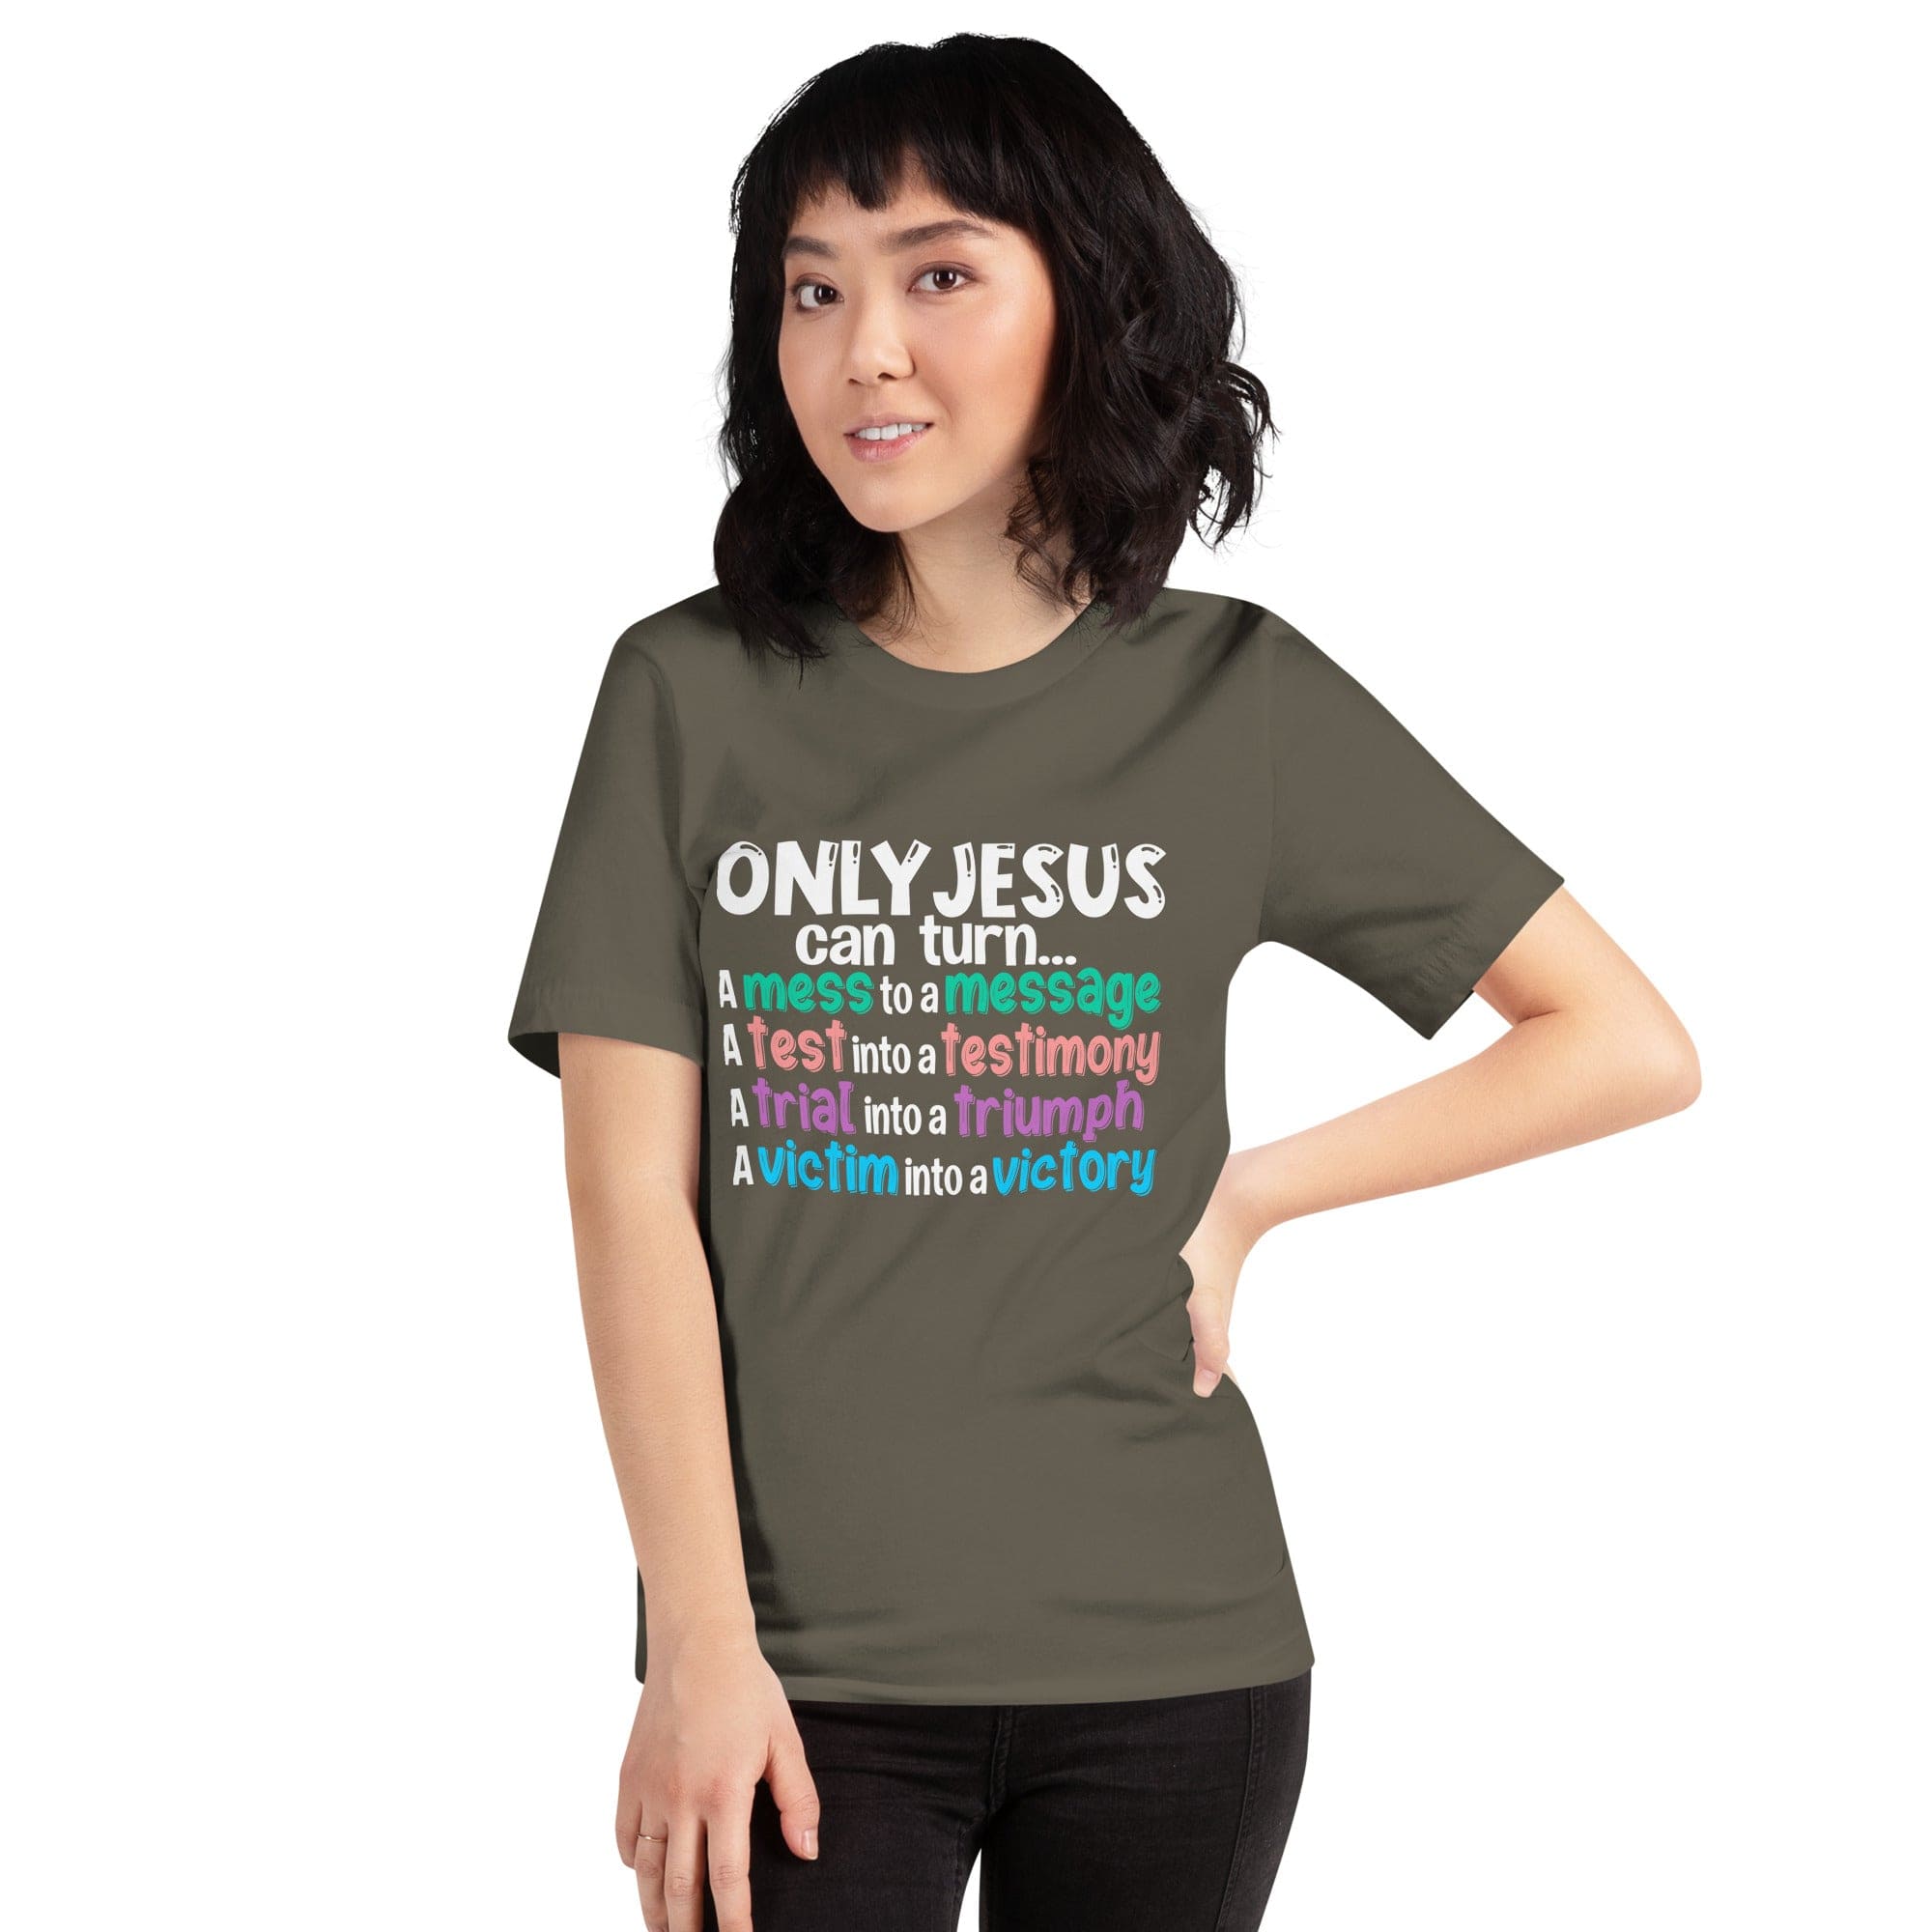 MoneyShot Army / S Only Jesus